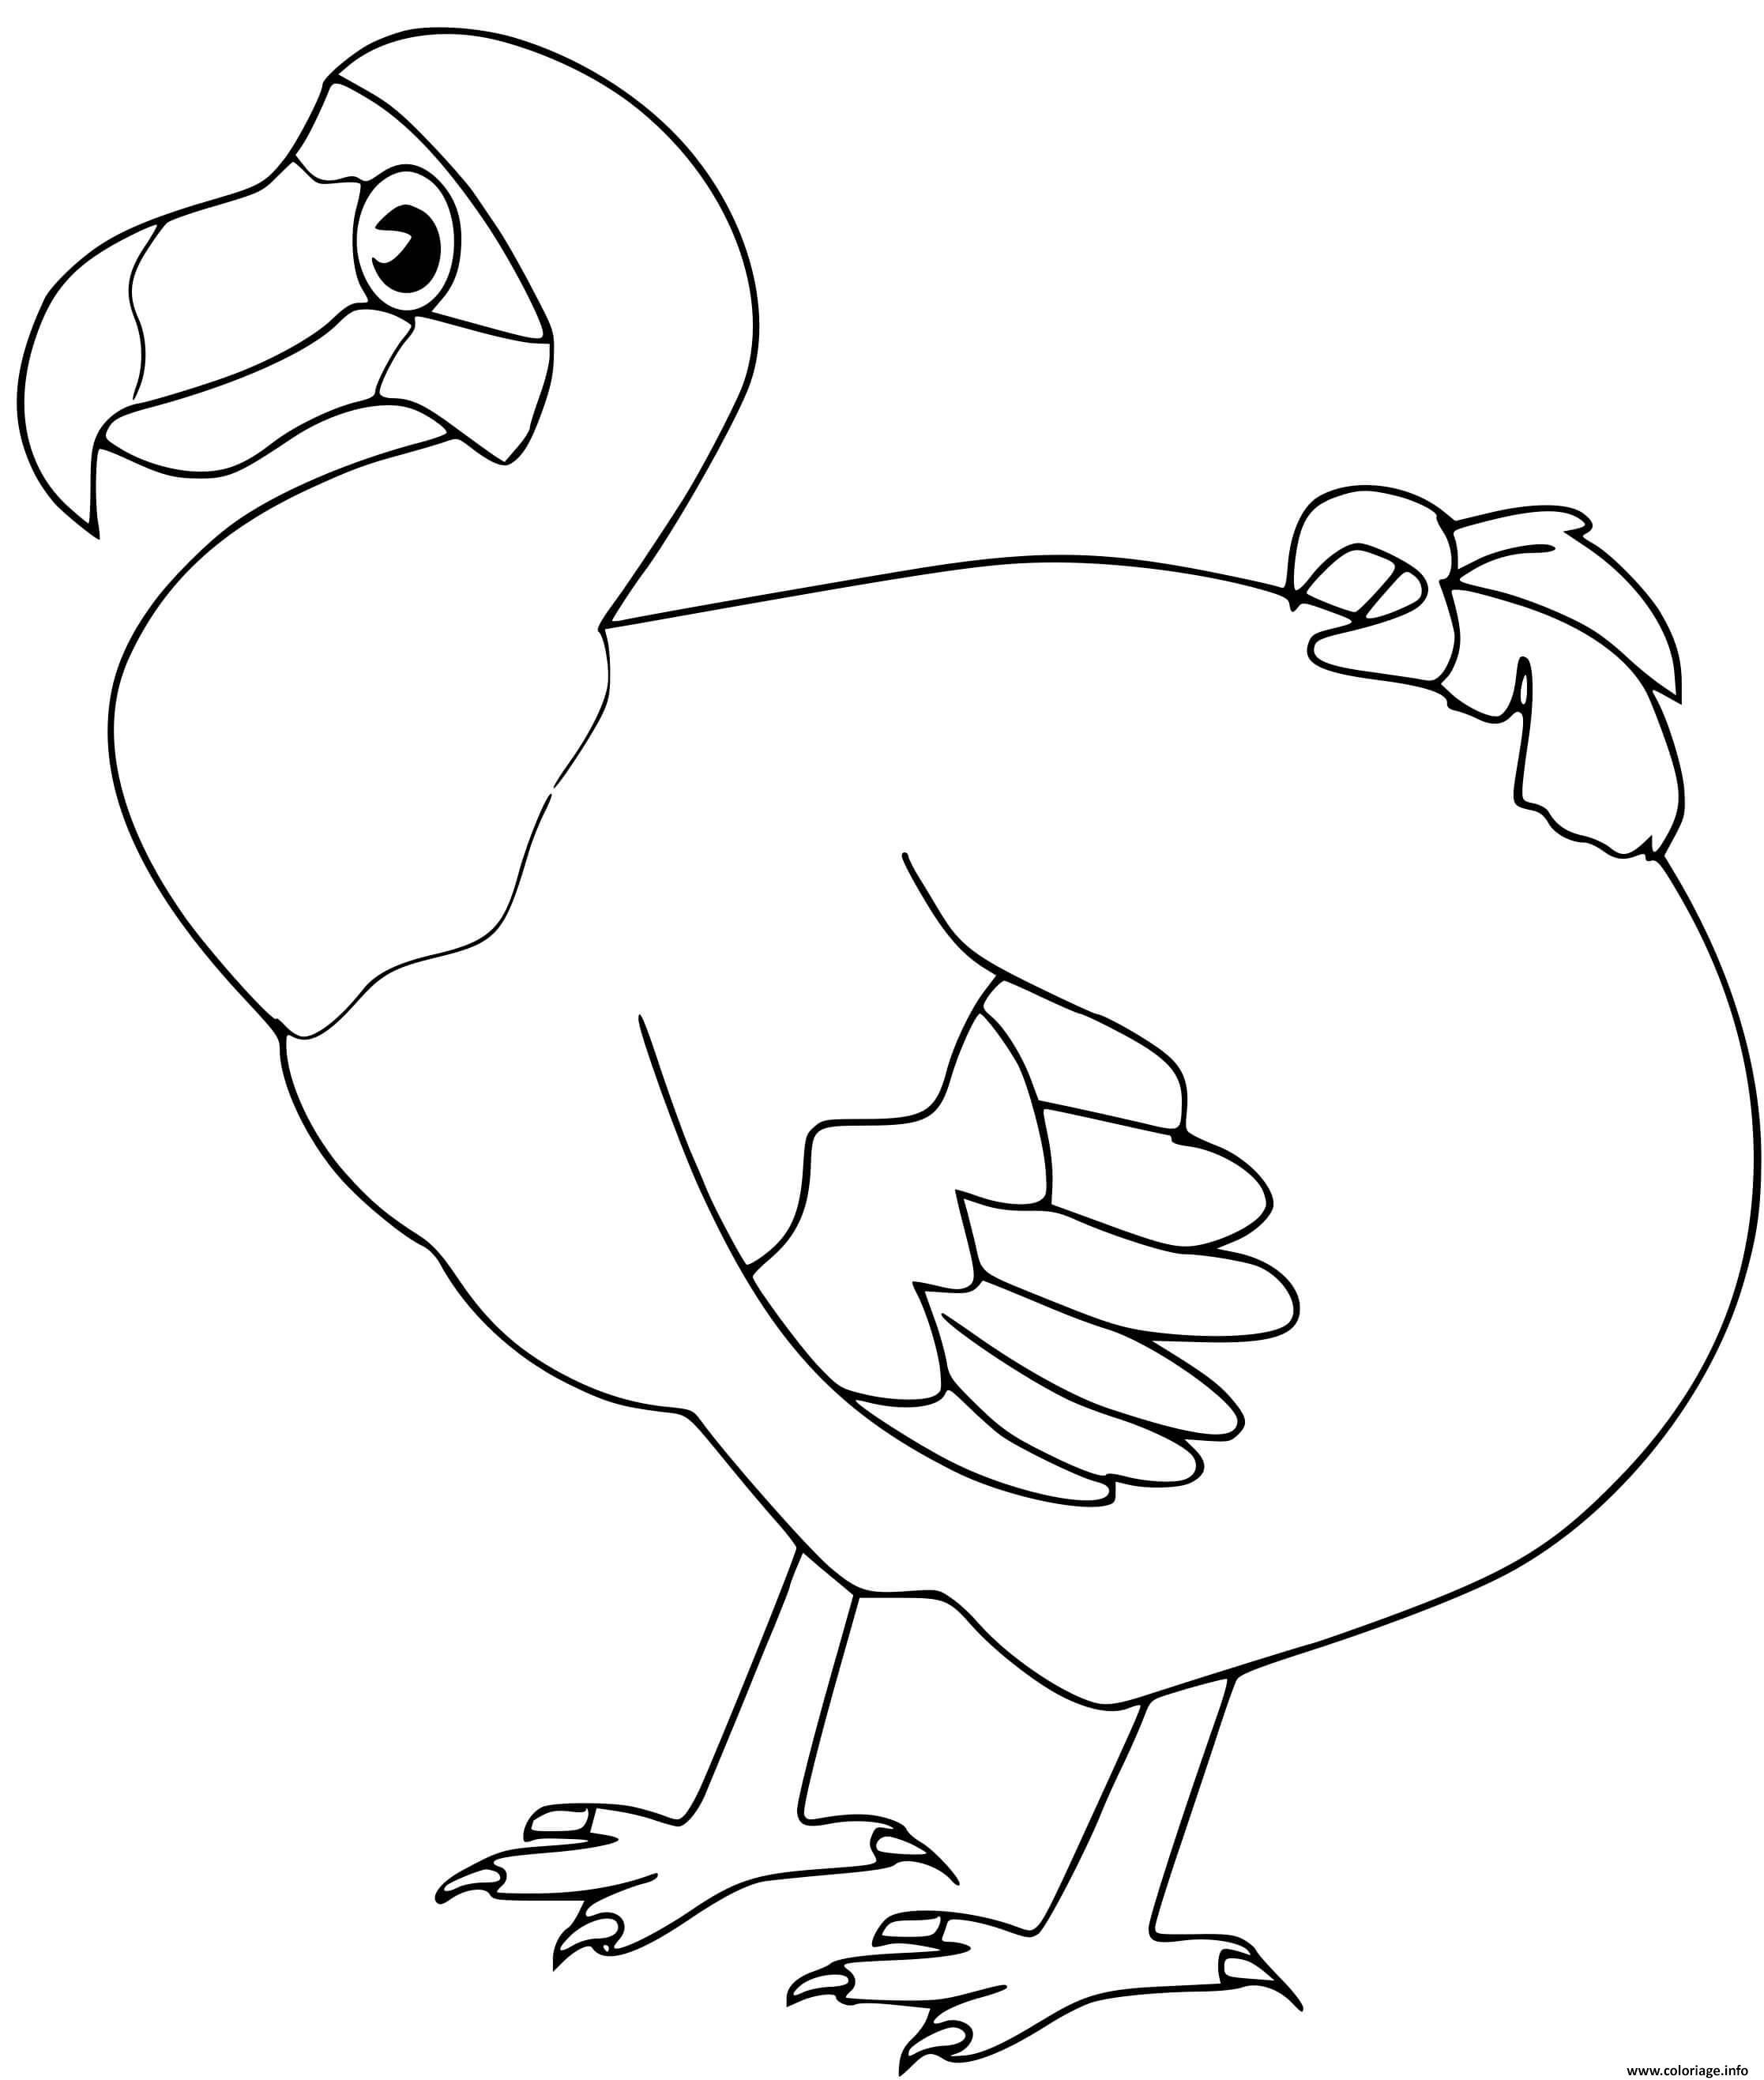 Coloring page spectacular dodo bird